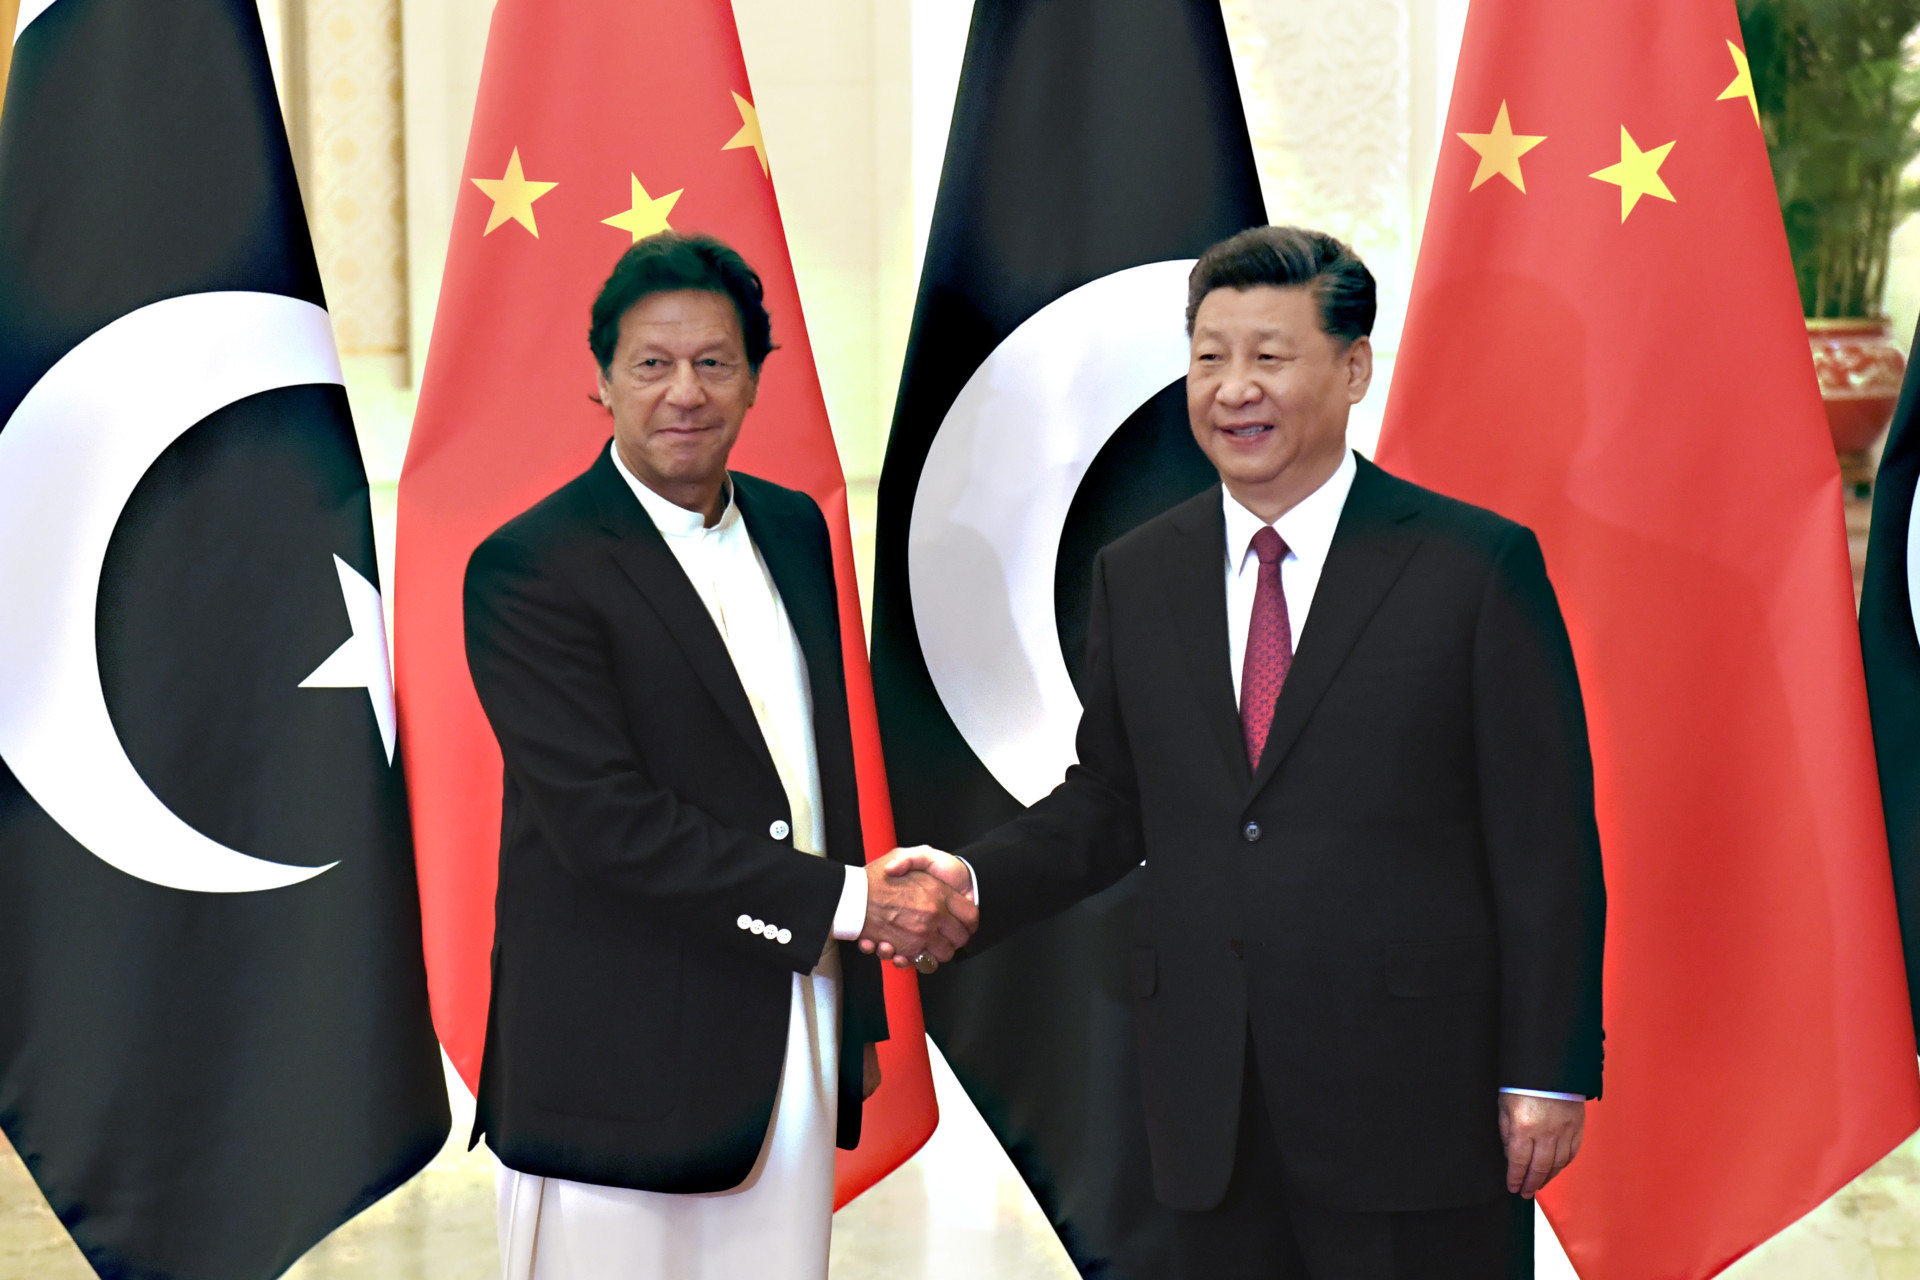 Pakistan's Prime Minister Imran Khan Meets With China's President Xi Jinping|20201222-TA-Pakistan_Leadership|20201222-TA-Pakistan_Arms|20201222-Myanmar-China-BRI-Ring|20201218-India-Rowden-CPEC-1